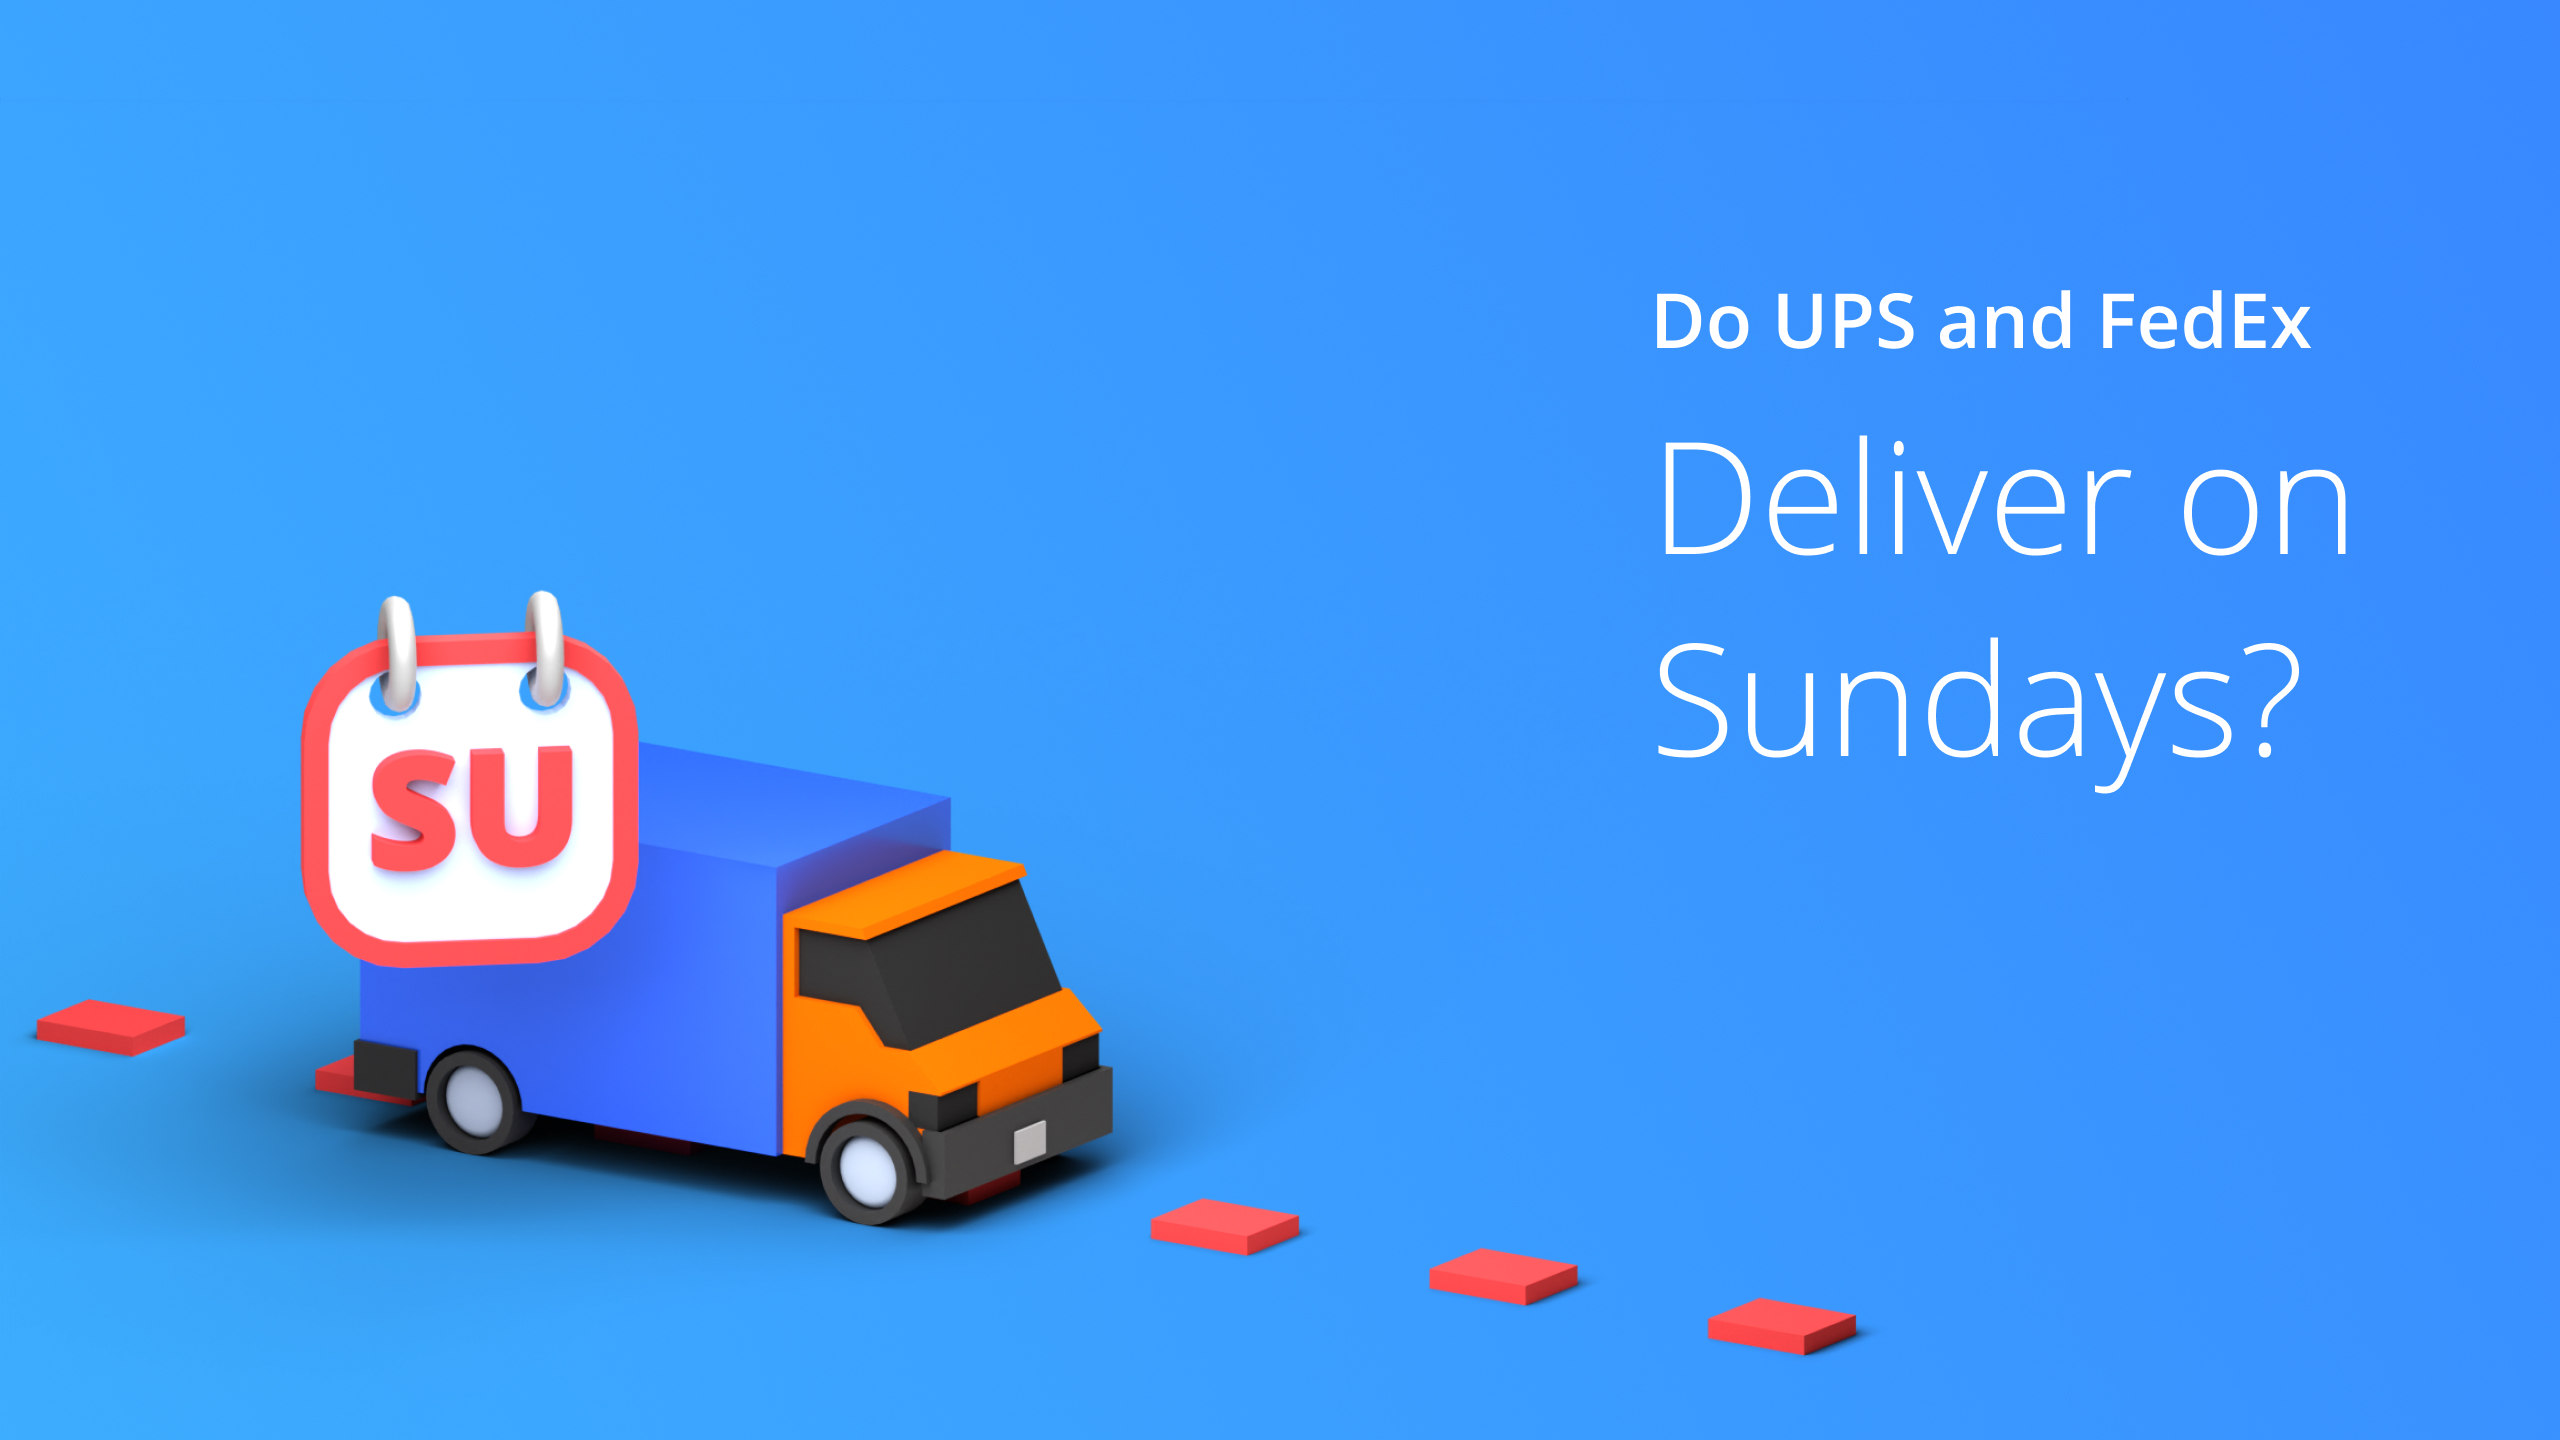 Custom Image - Do UPS and FedEx deliver on Sundays?